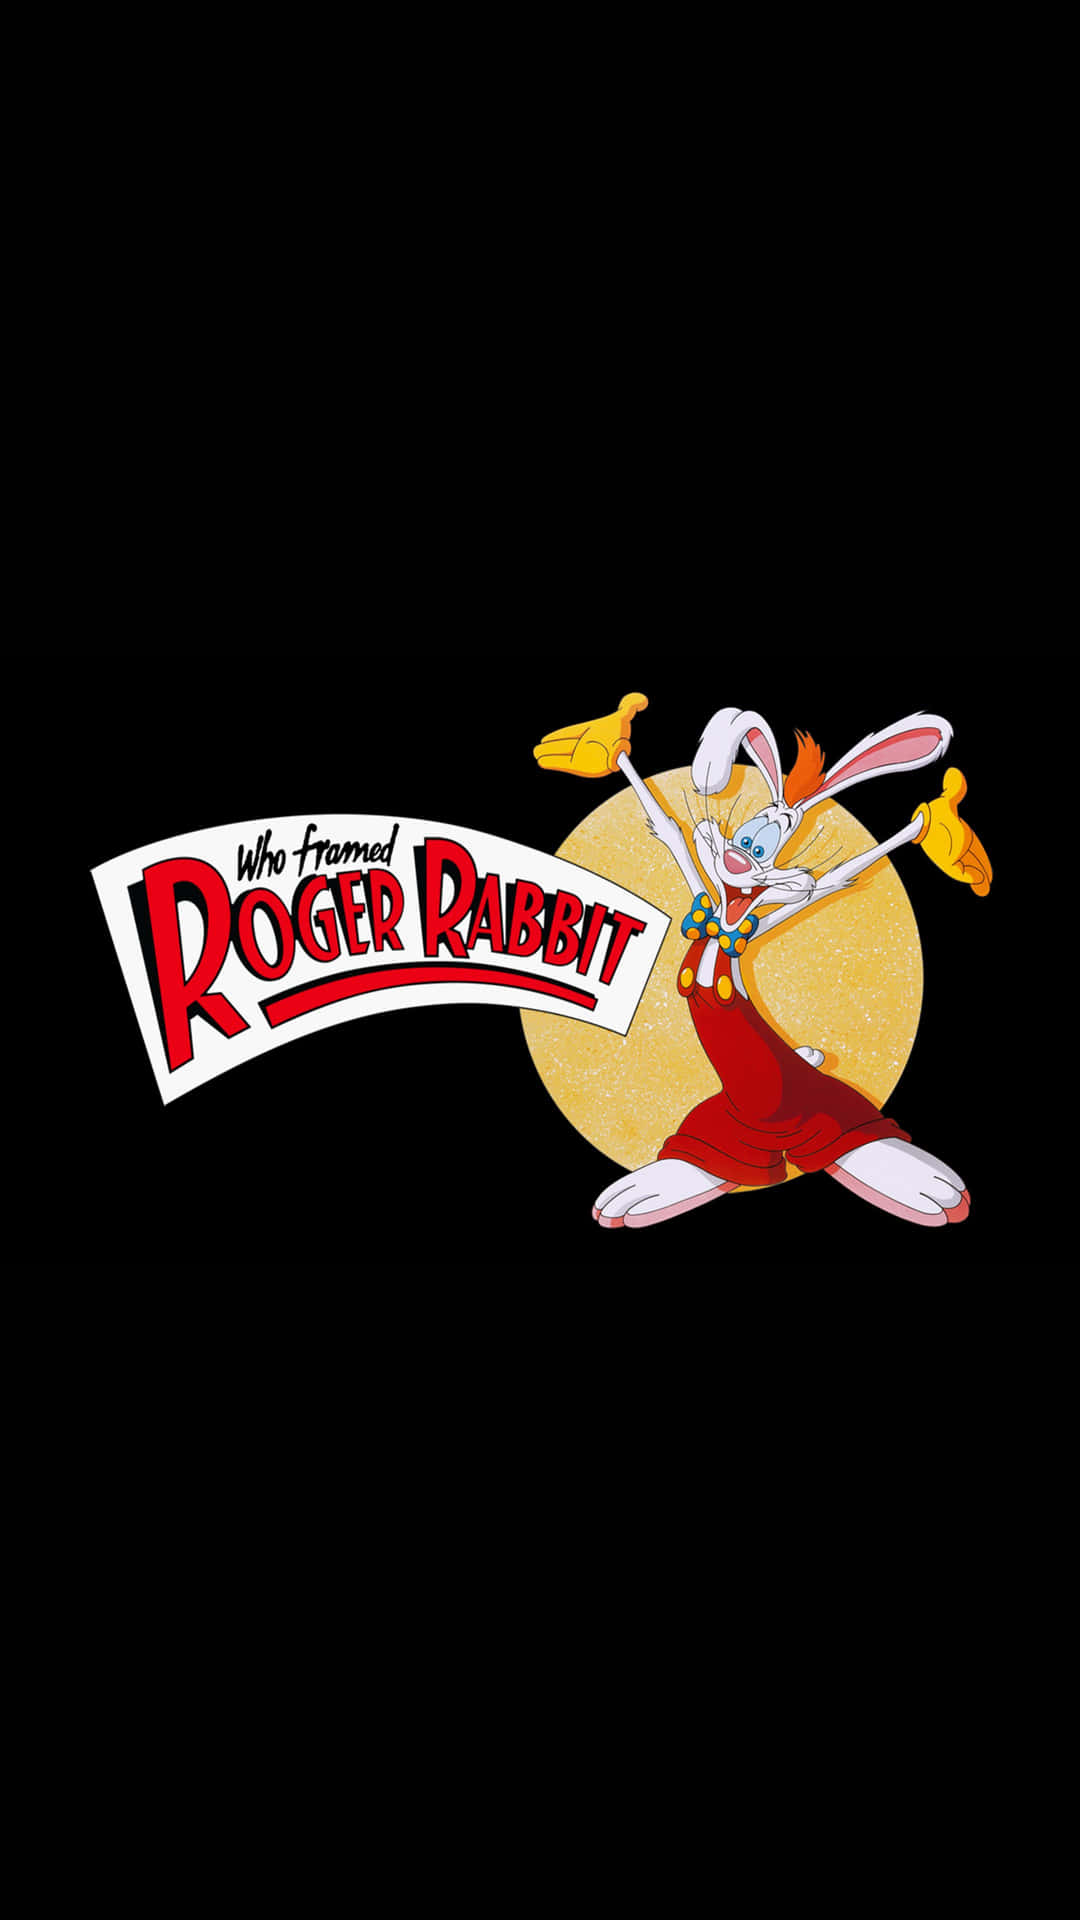 Roger Rabbit Movie Logo Graphic Background